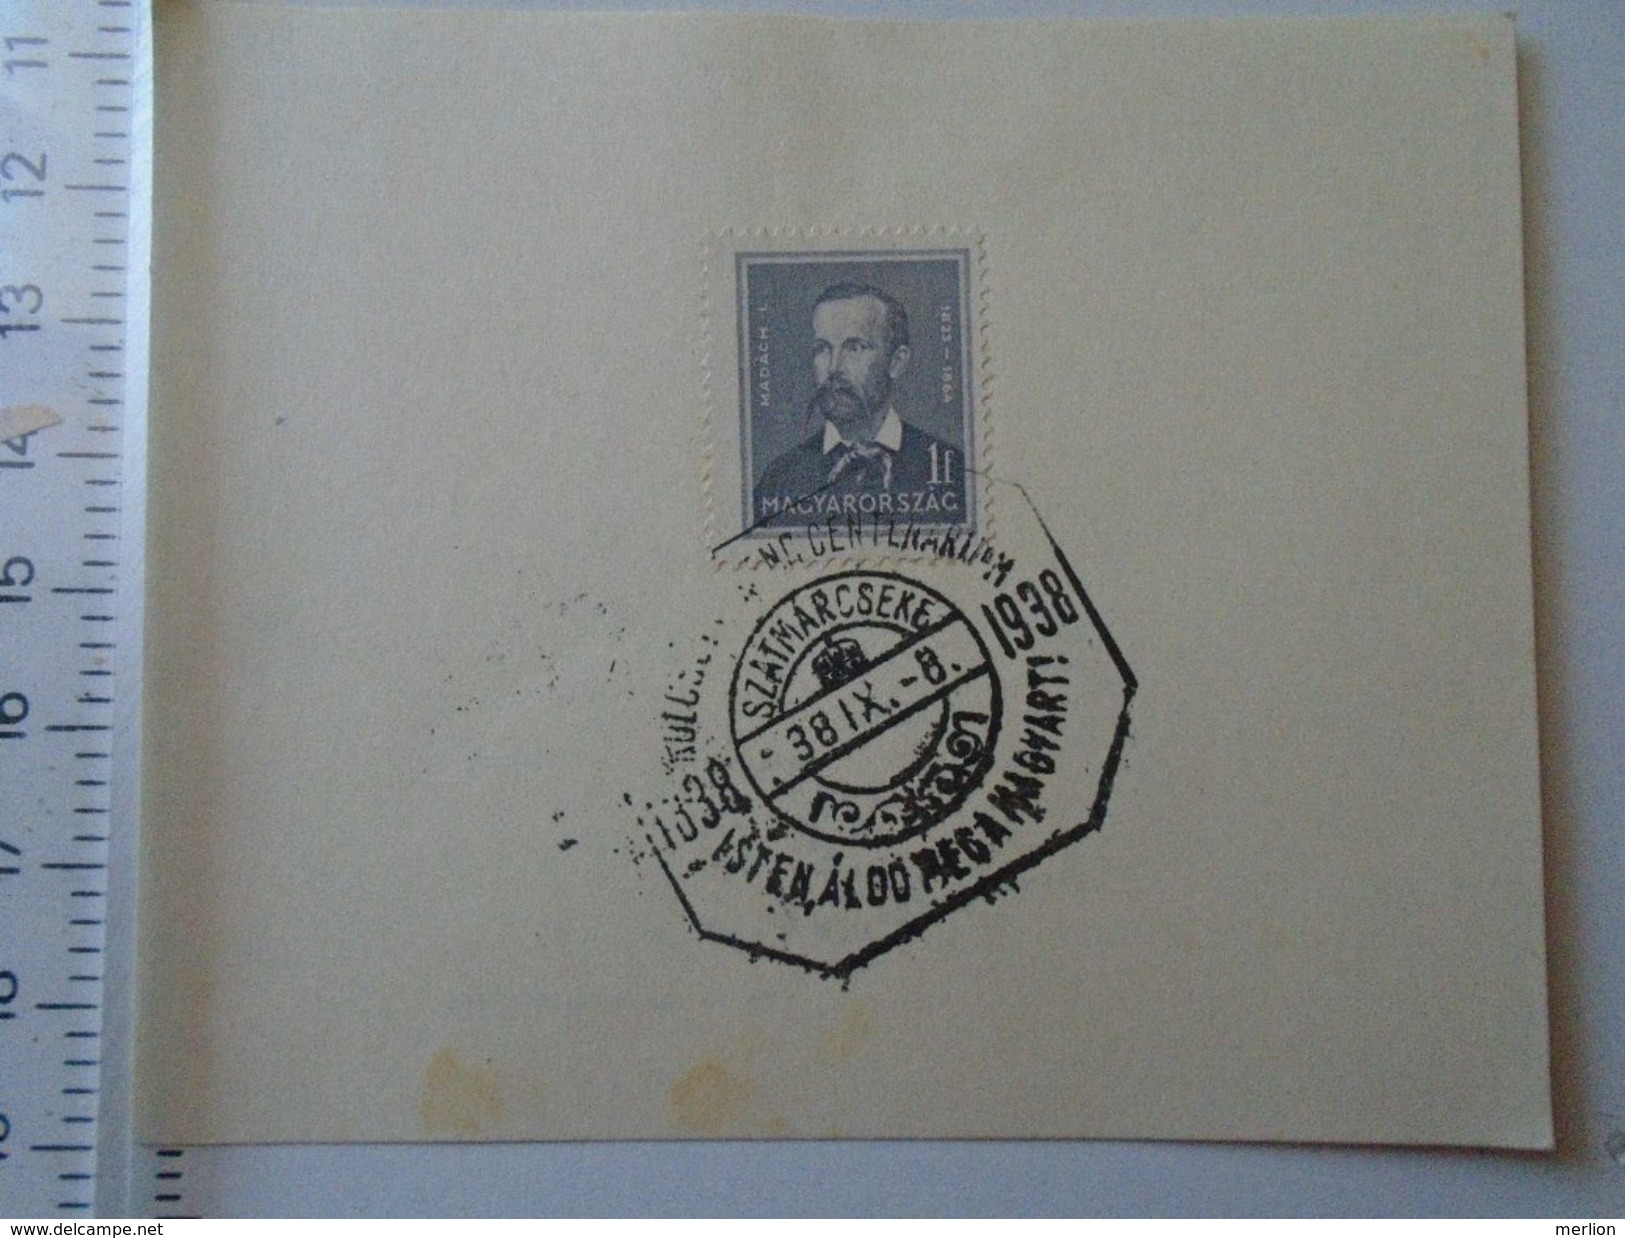 D150995.9  Hungary  Stamp With Cancel  Hungary - Kölcsey Ferenc Centenarium  SZATMARCSEKE 1938 - Commemorative Sheets